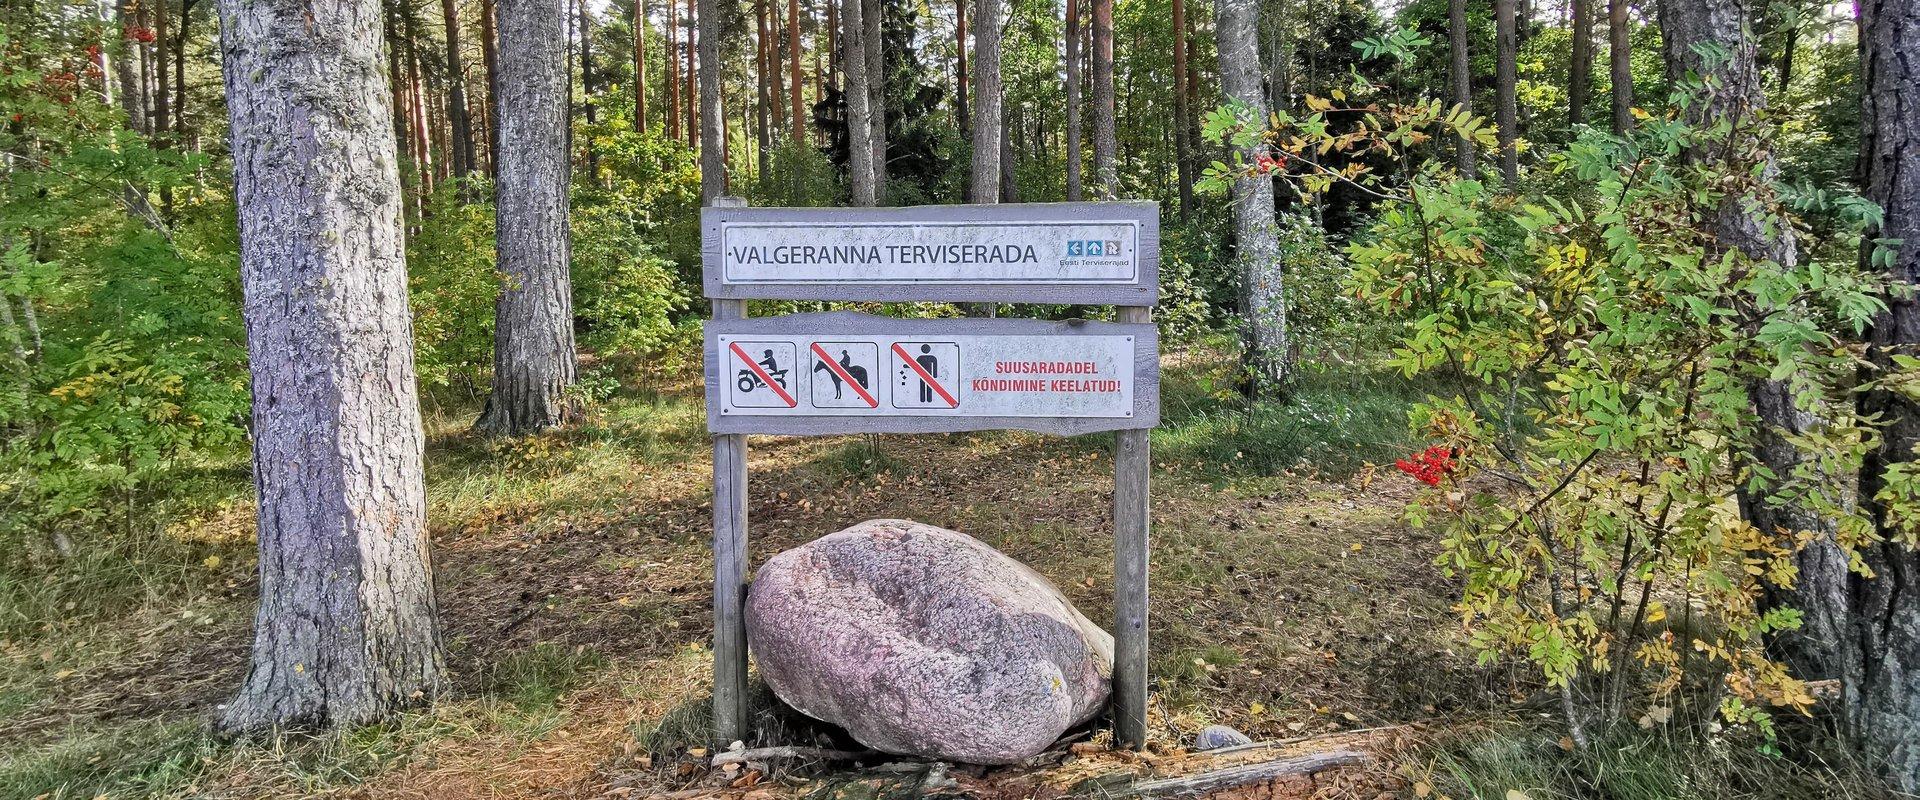 Valgeranna health trail